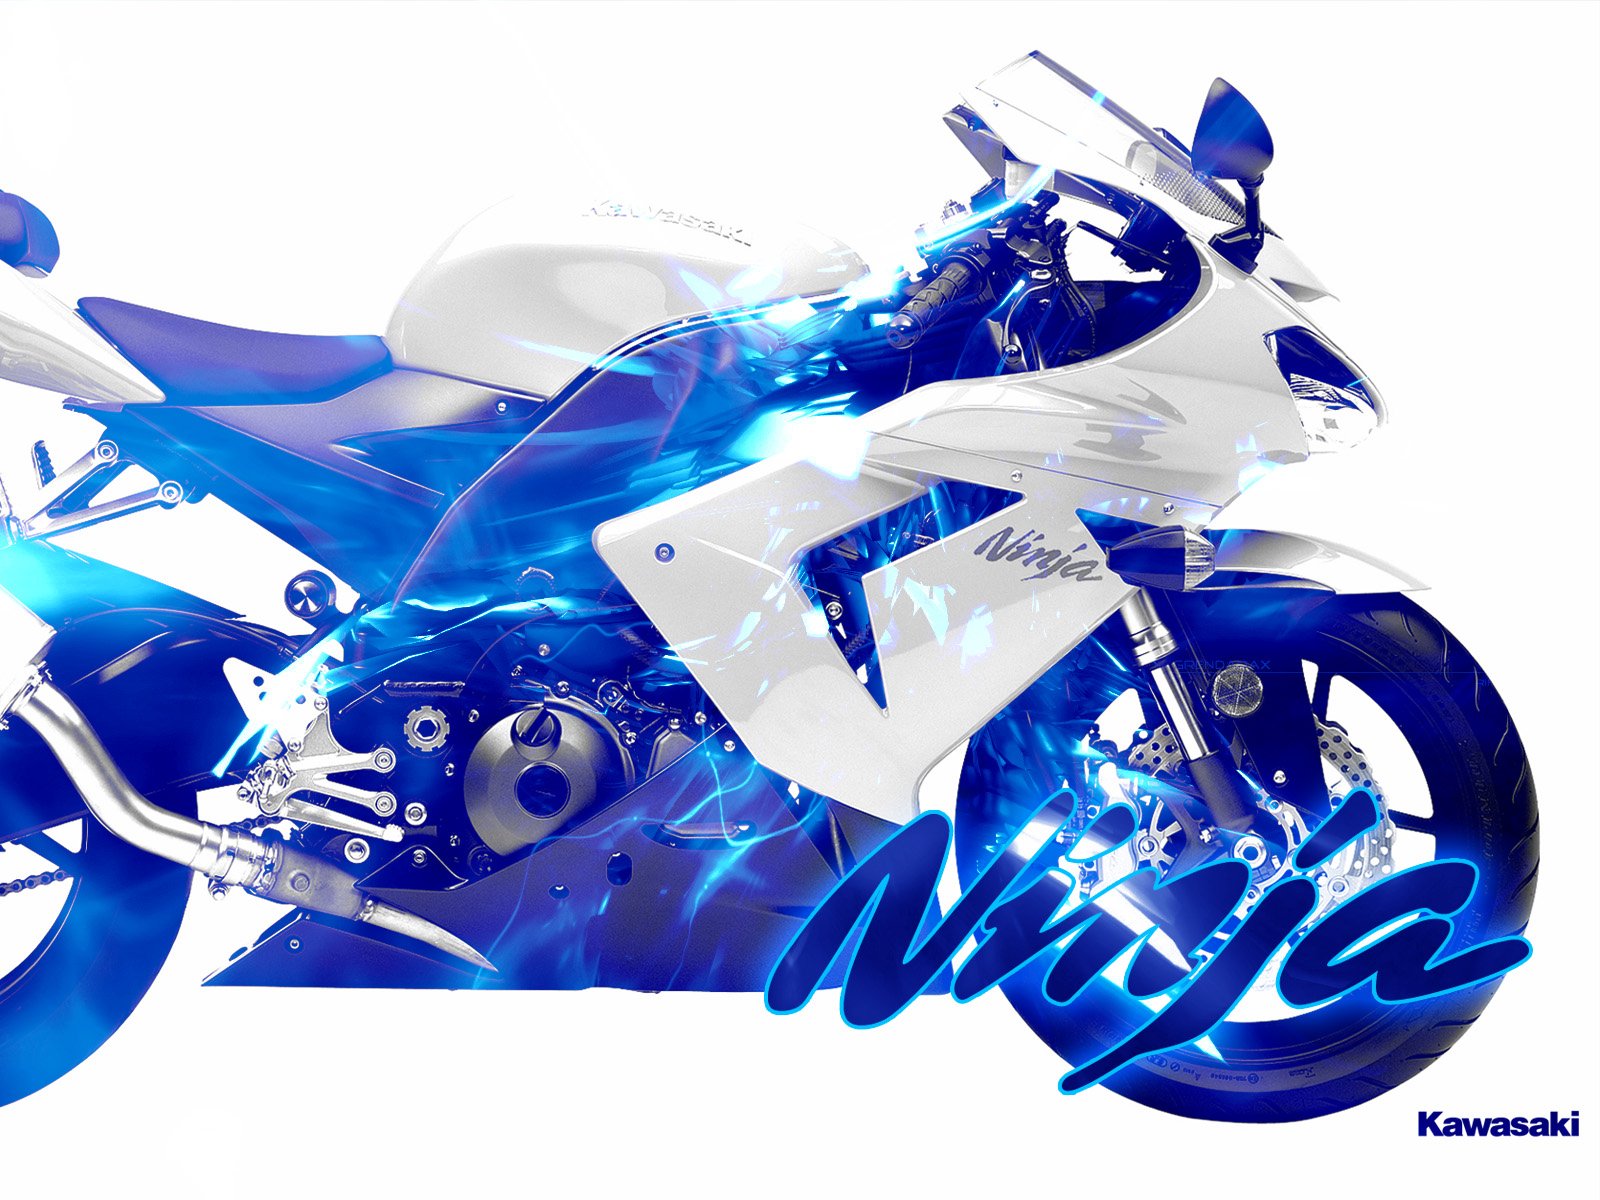 kawasaki, Ninja, Superbike, Bike, Motorbike, Motorcycle, Muscle Wallpaper